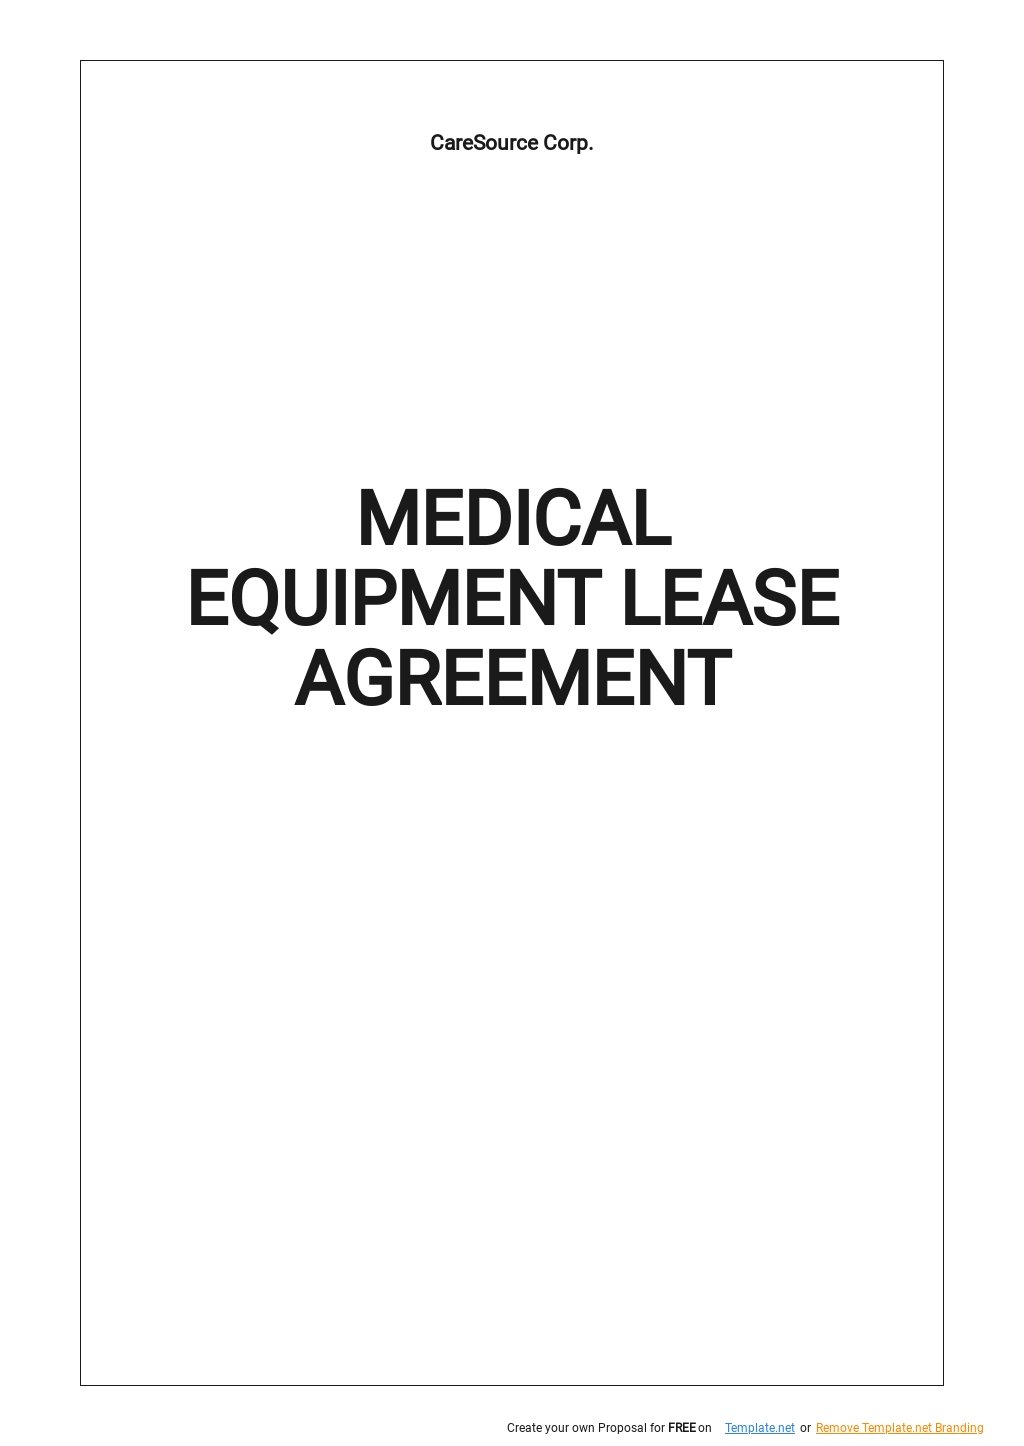 Medical Equipment Lease Agreement Template.jpe